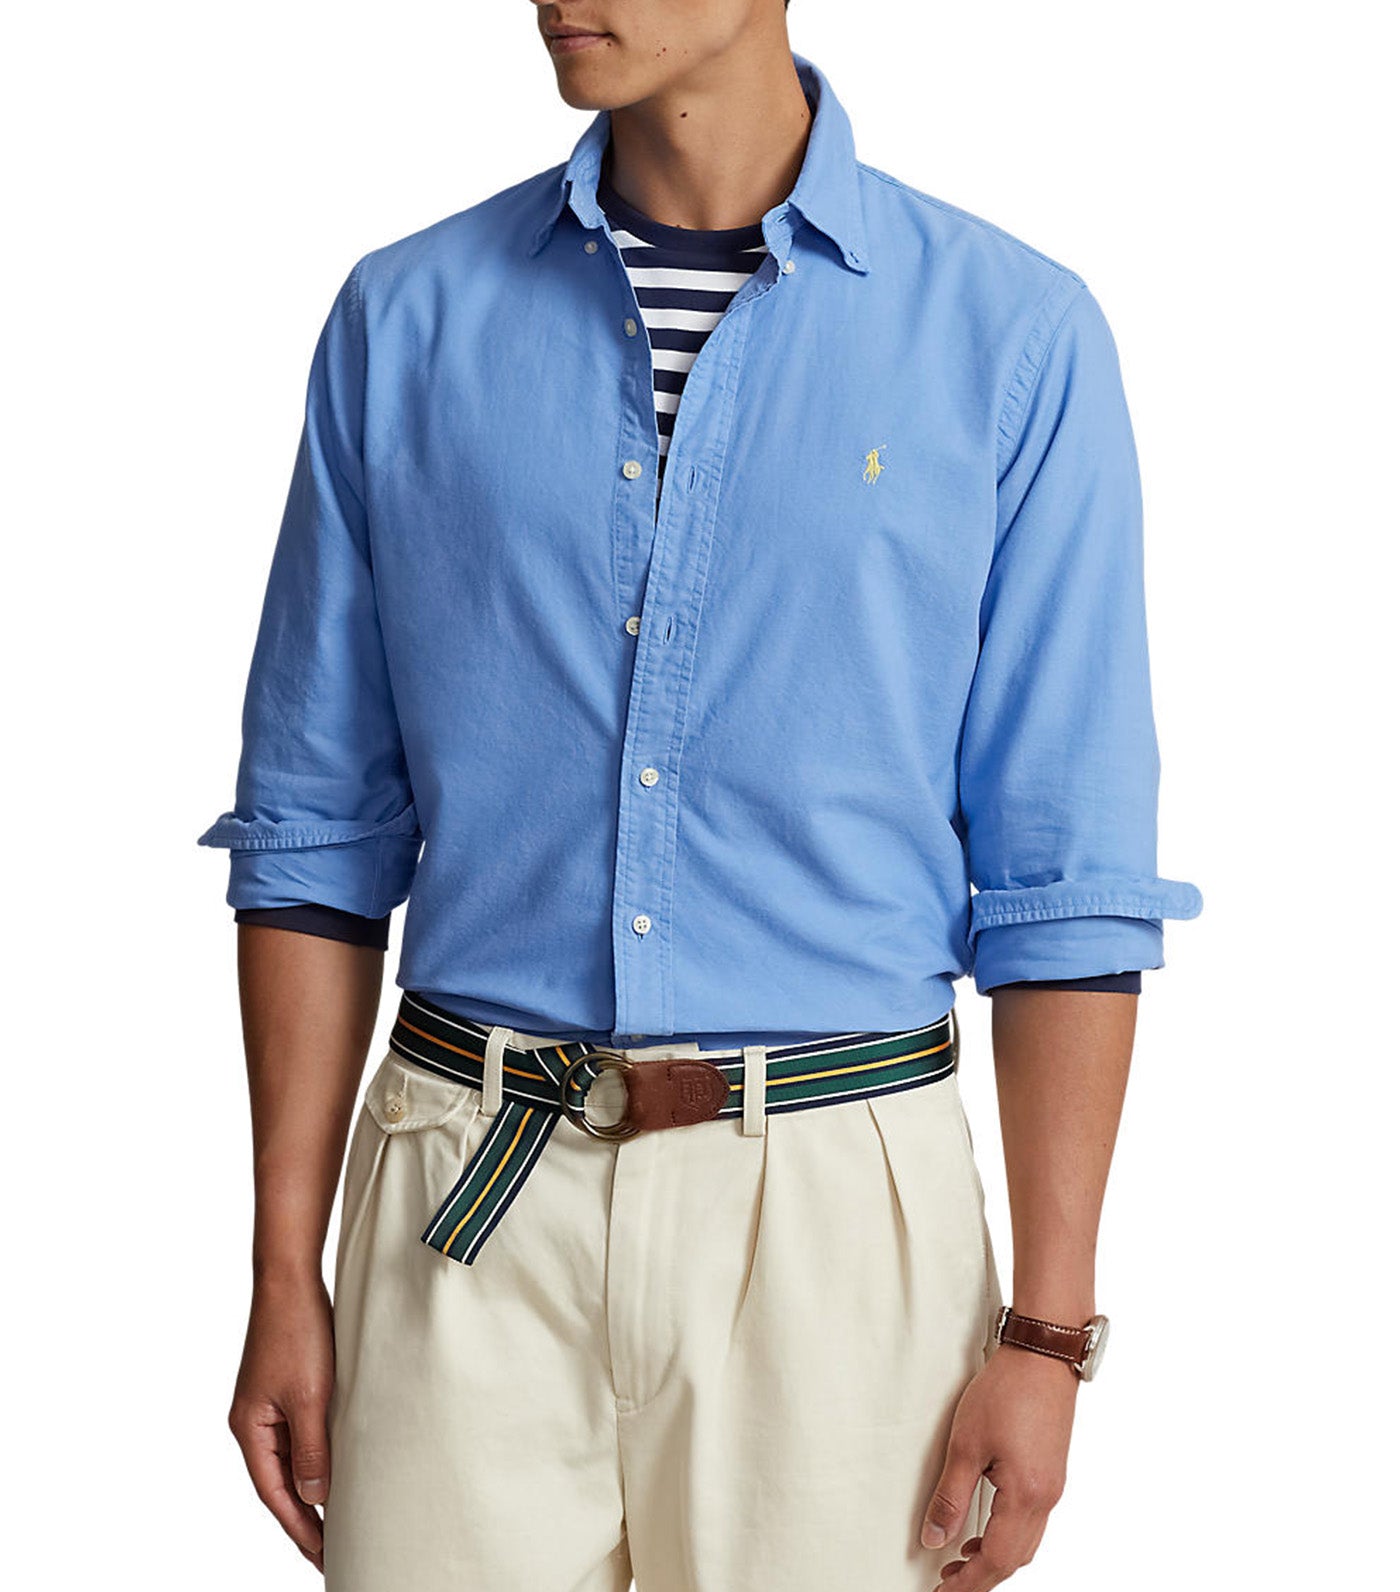 Men's Custom Fit Garment-Dyed Oxford Shirt Harbor Island Blue